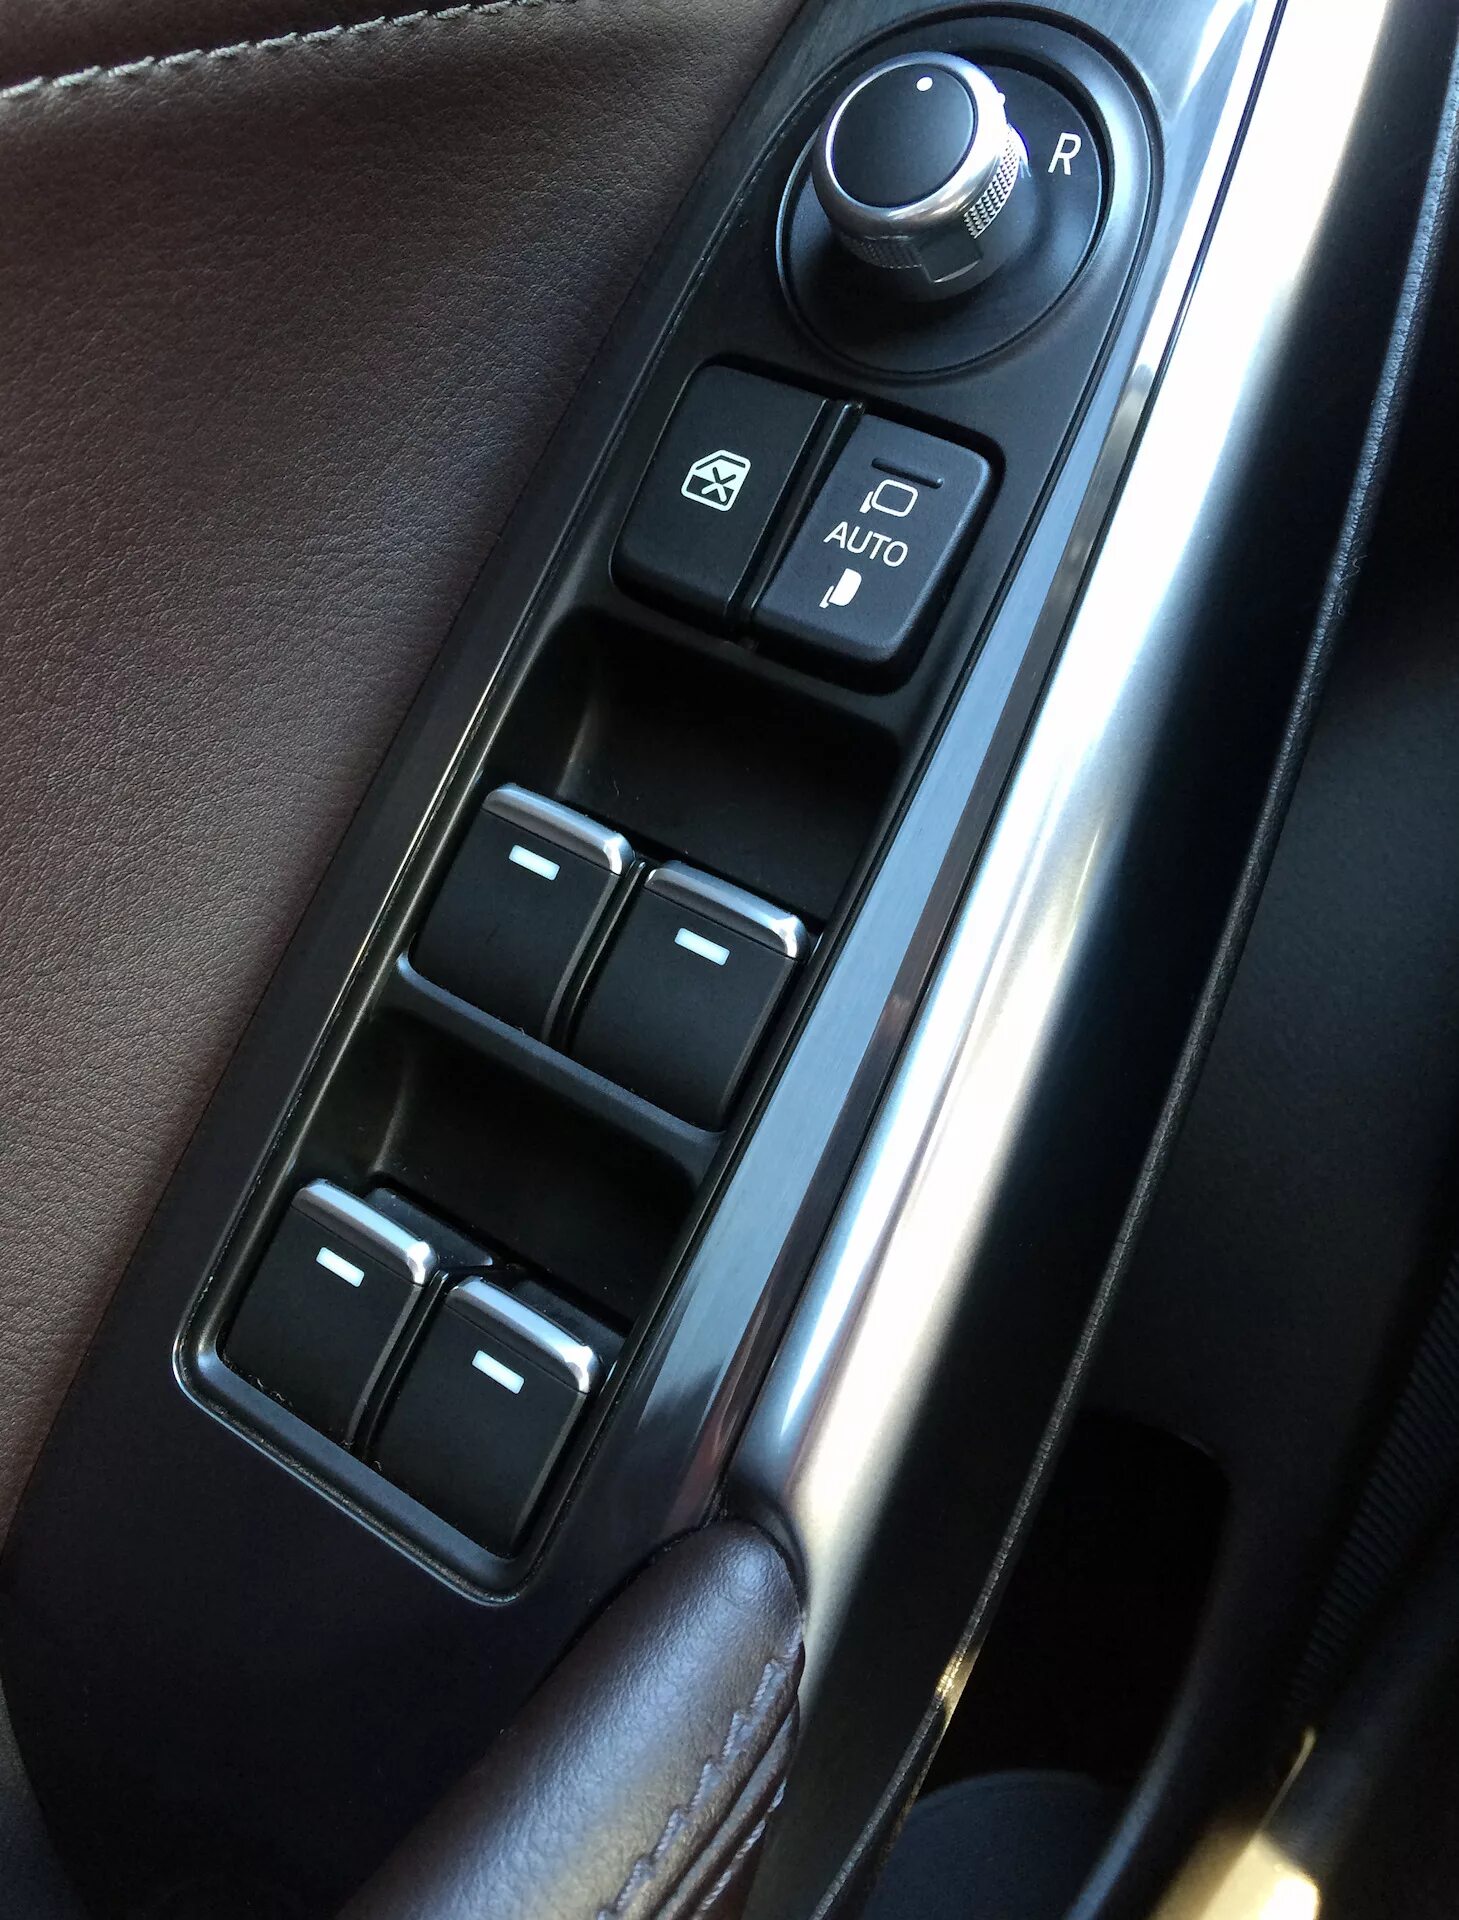 Складывание зеркал мазда 6. Кнопка складывания зеркал Мазда 6. Кнопки на водительской двери Мазда 6. Кнопки Мазда сх5. Кнопка Set Mazda CX-5.